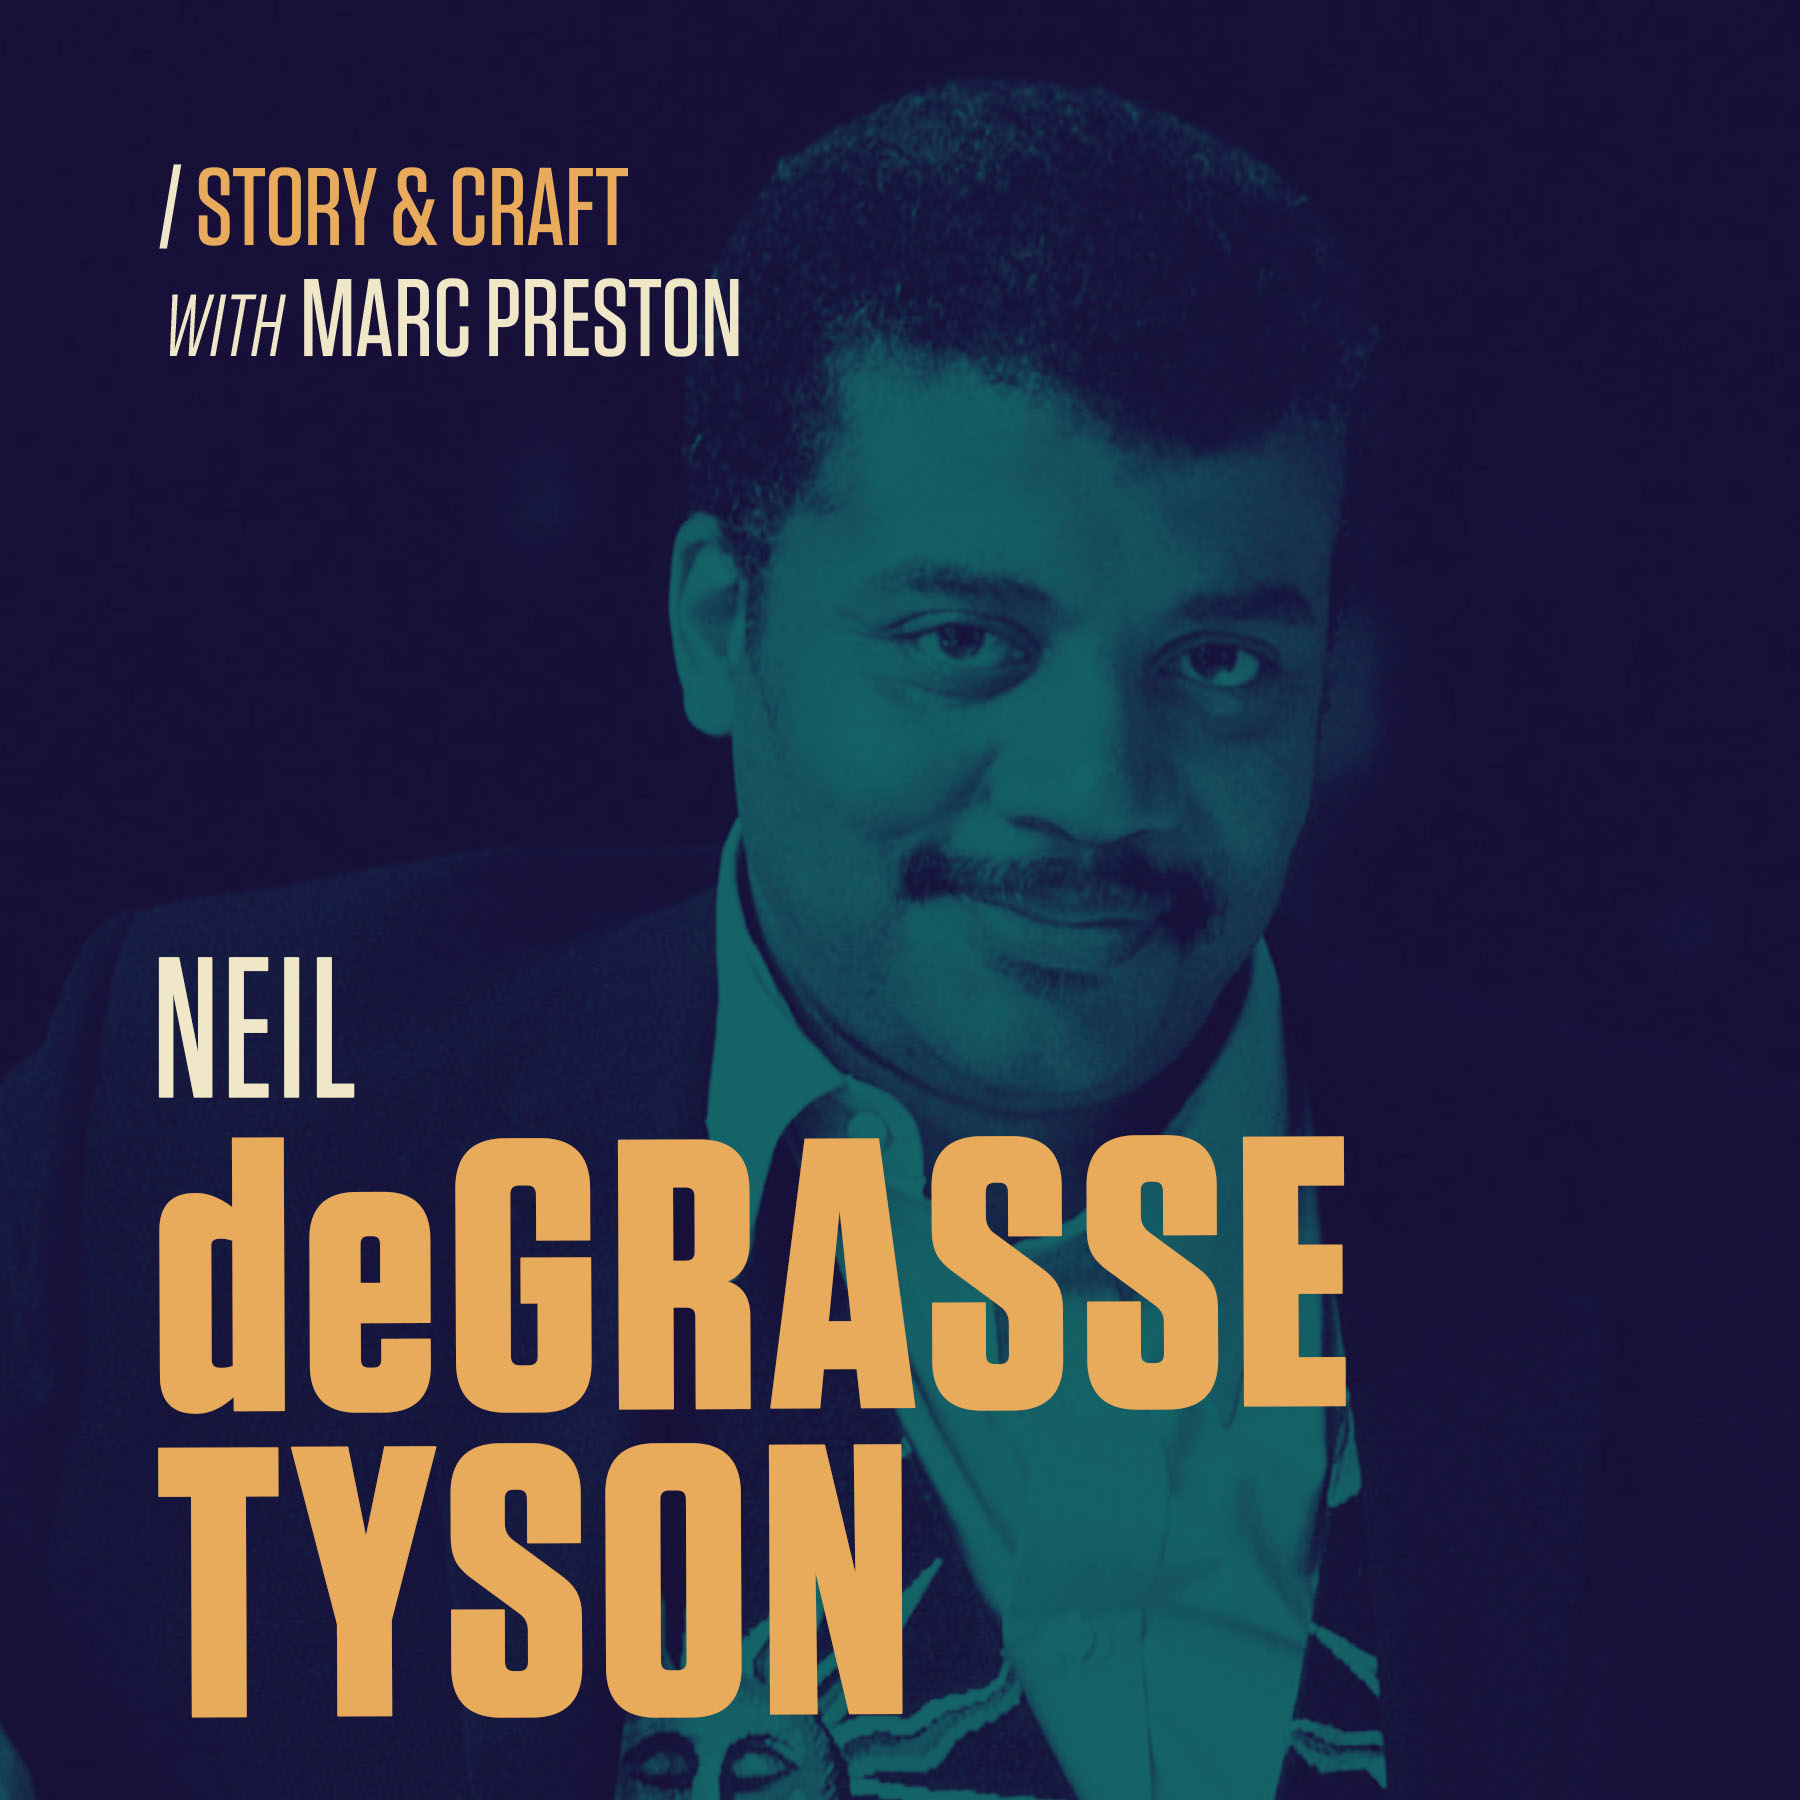 Neil deGrasse Tyson | Your Personal Astrophysicist